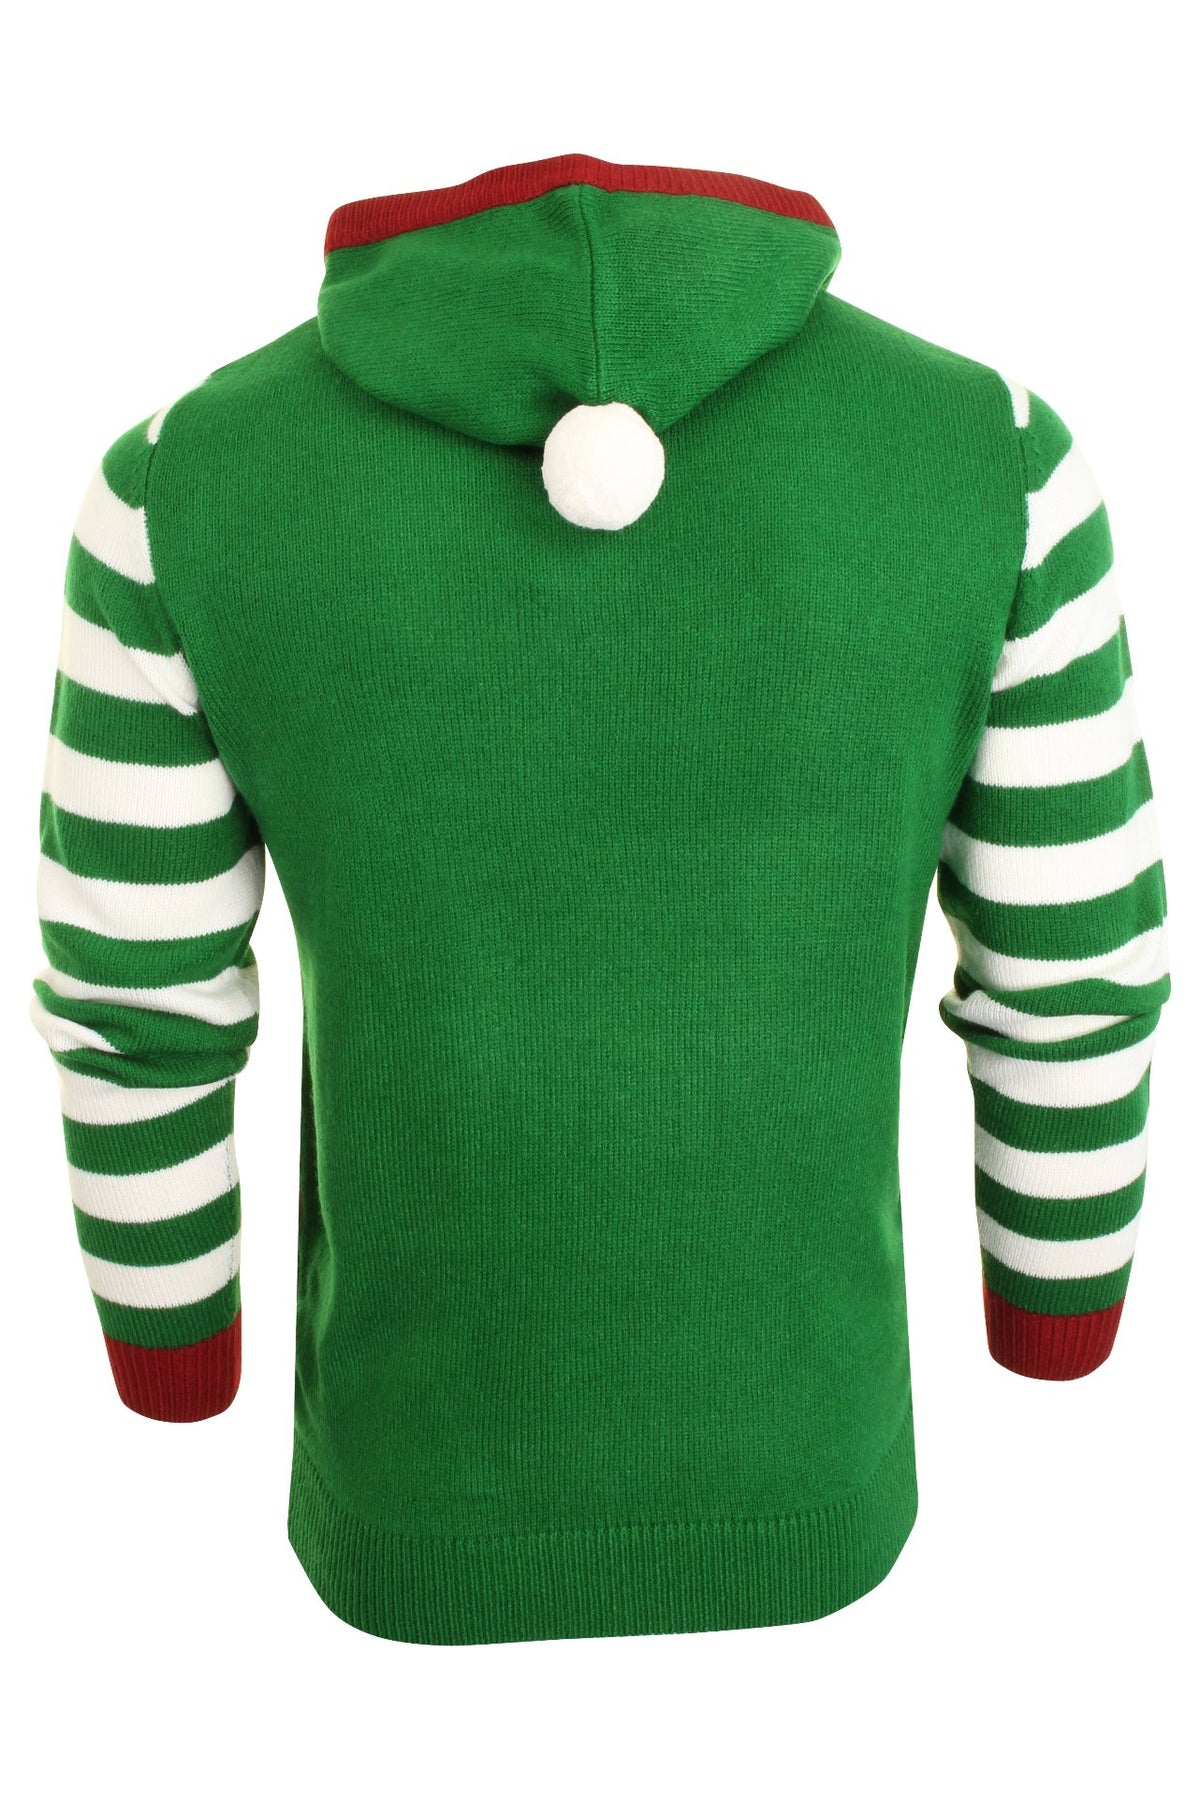 Men's Xact Novelty Hooded Christmas Jumper, 03, XK1010, Elf - Green